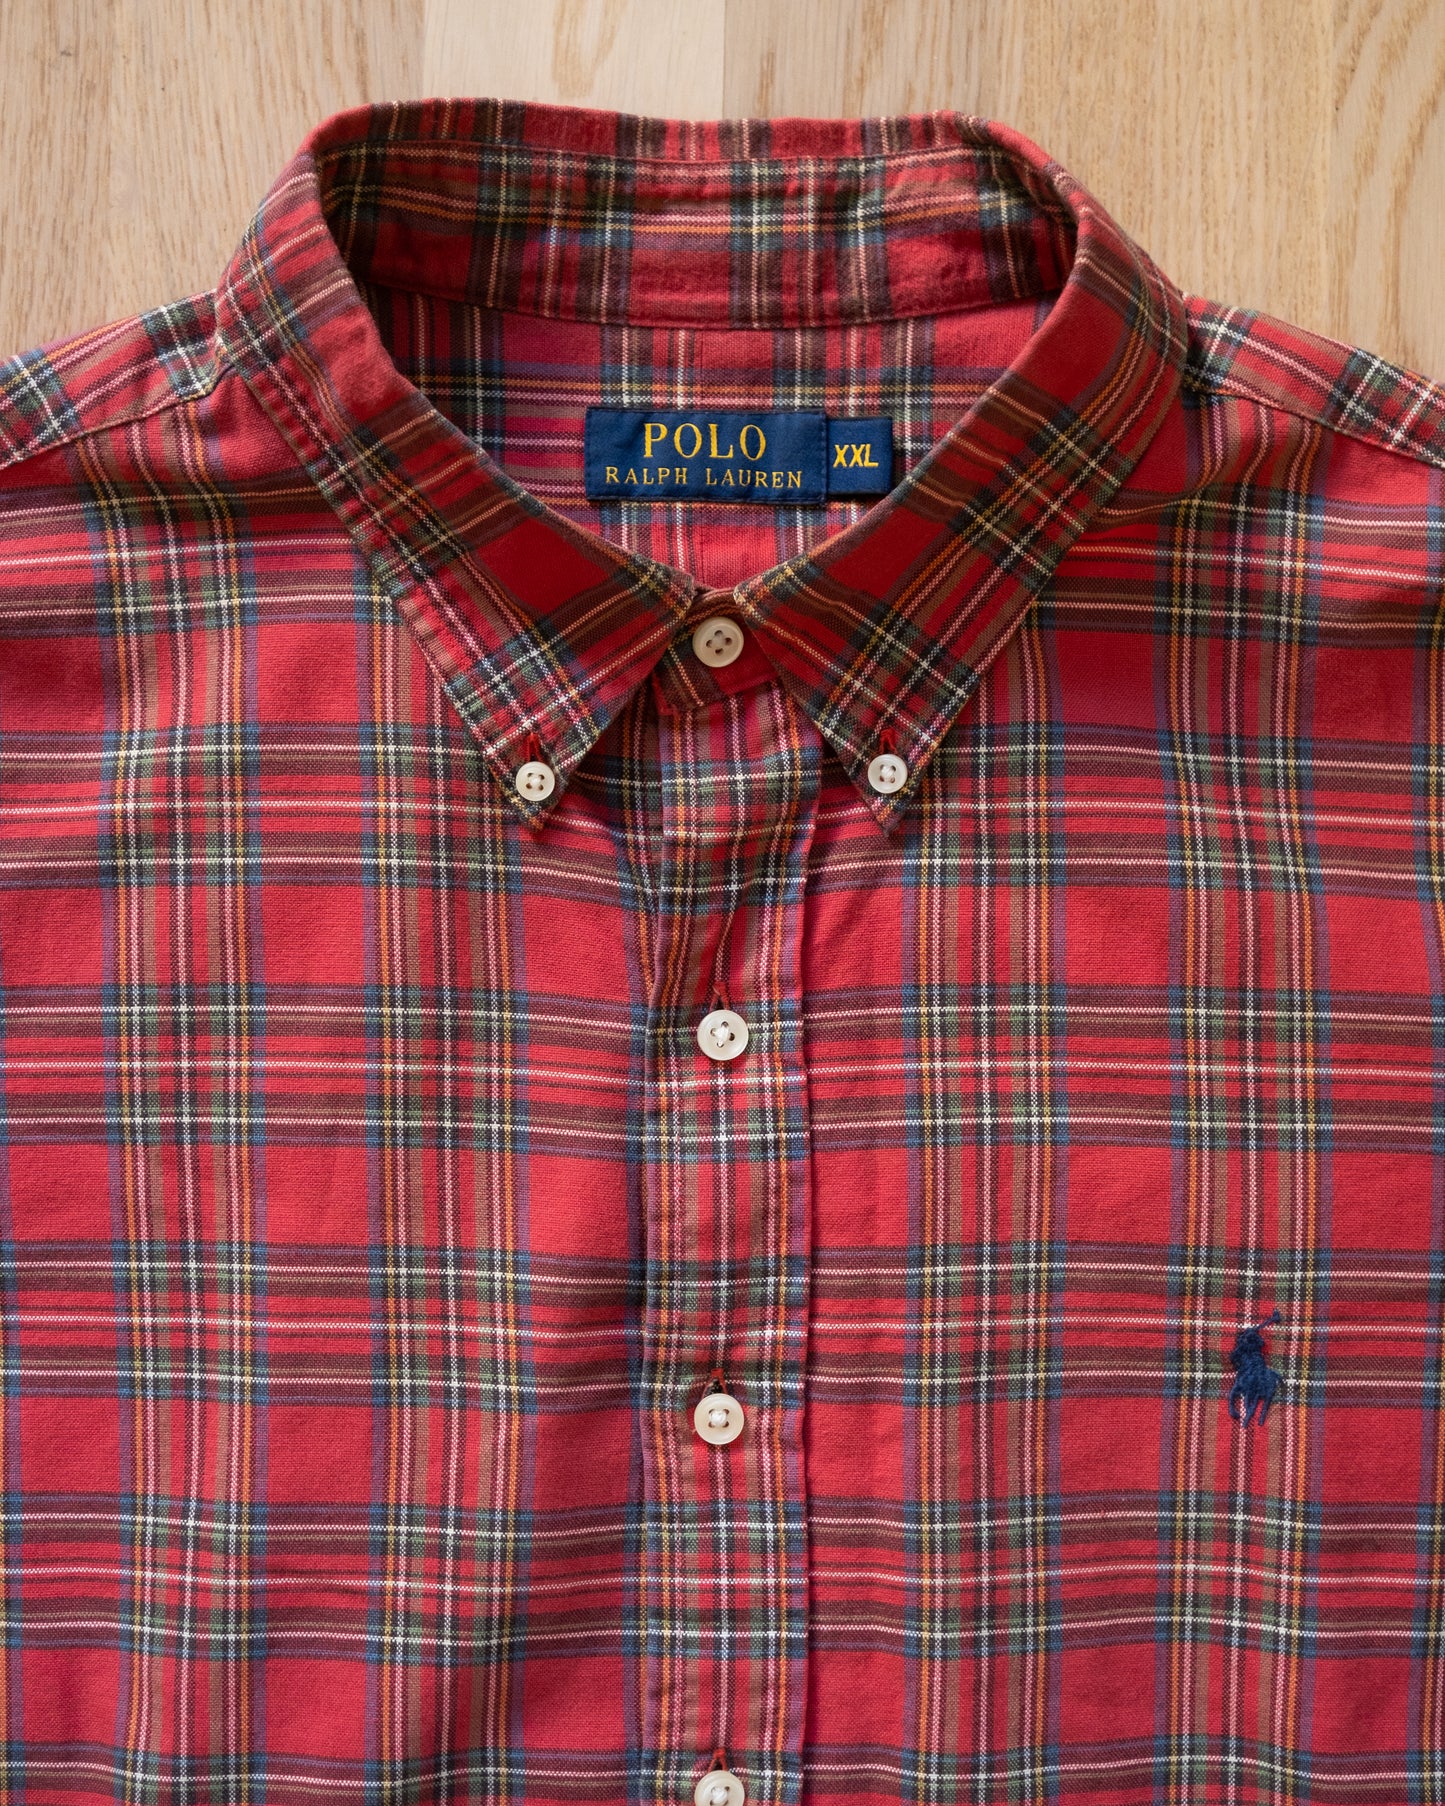 Polo Ralph Lauren Vintage Button-Up Shirt Size XXL